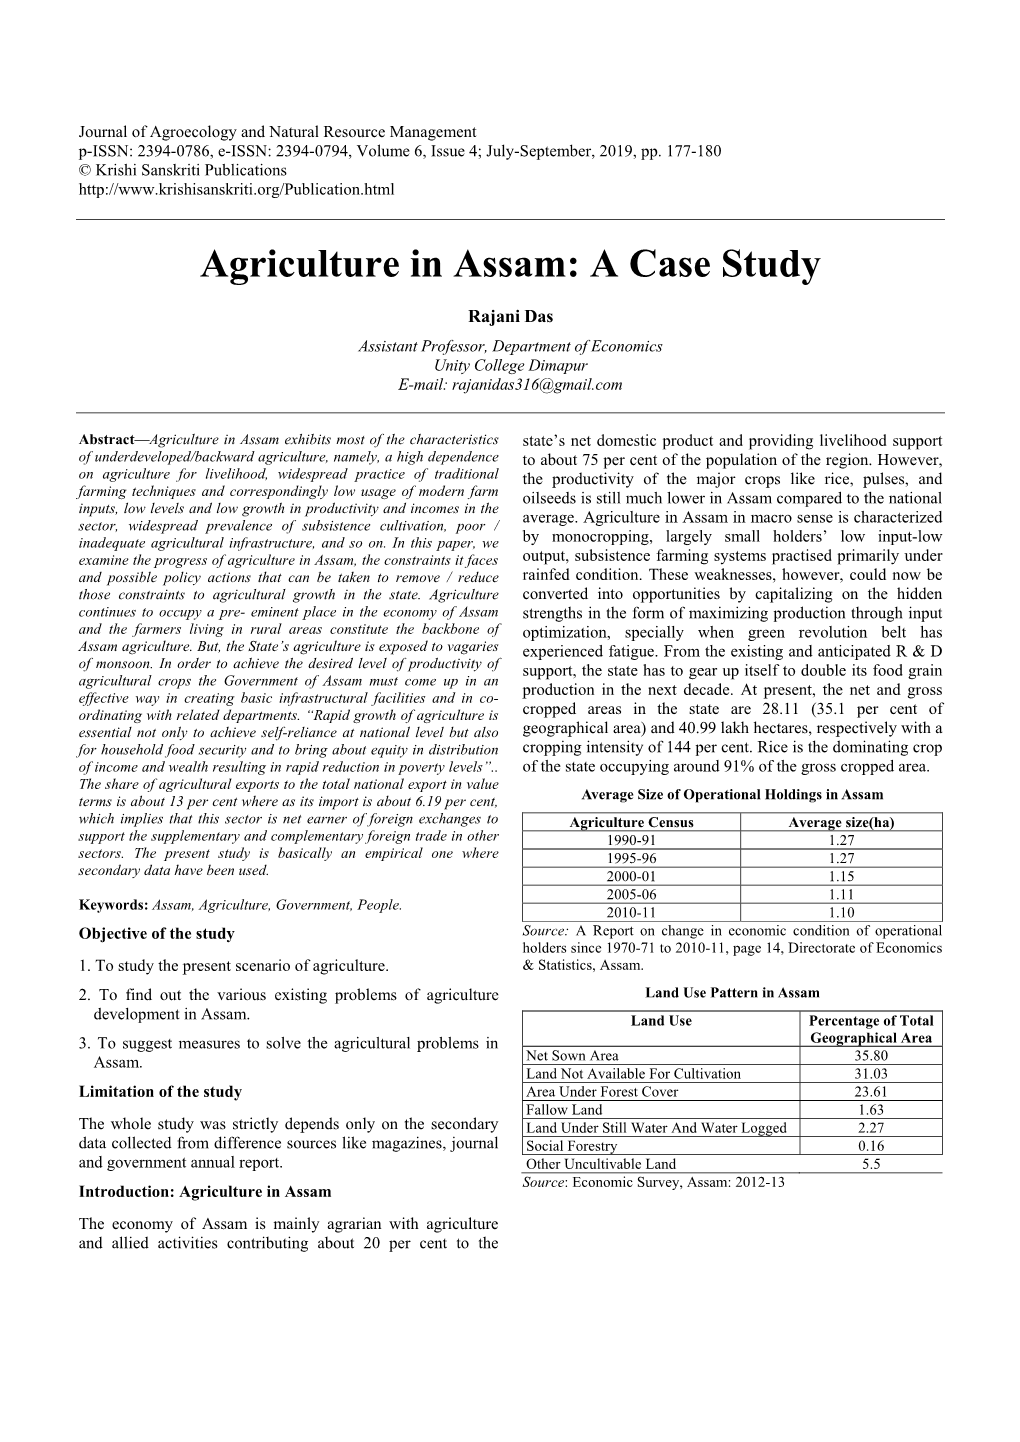 Agriculture in Assam: a Case Study